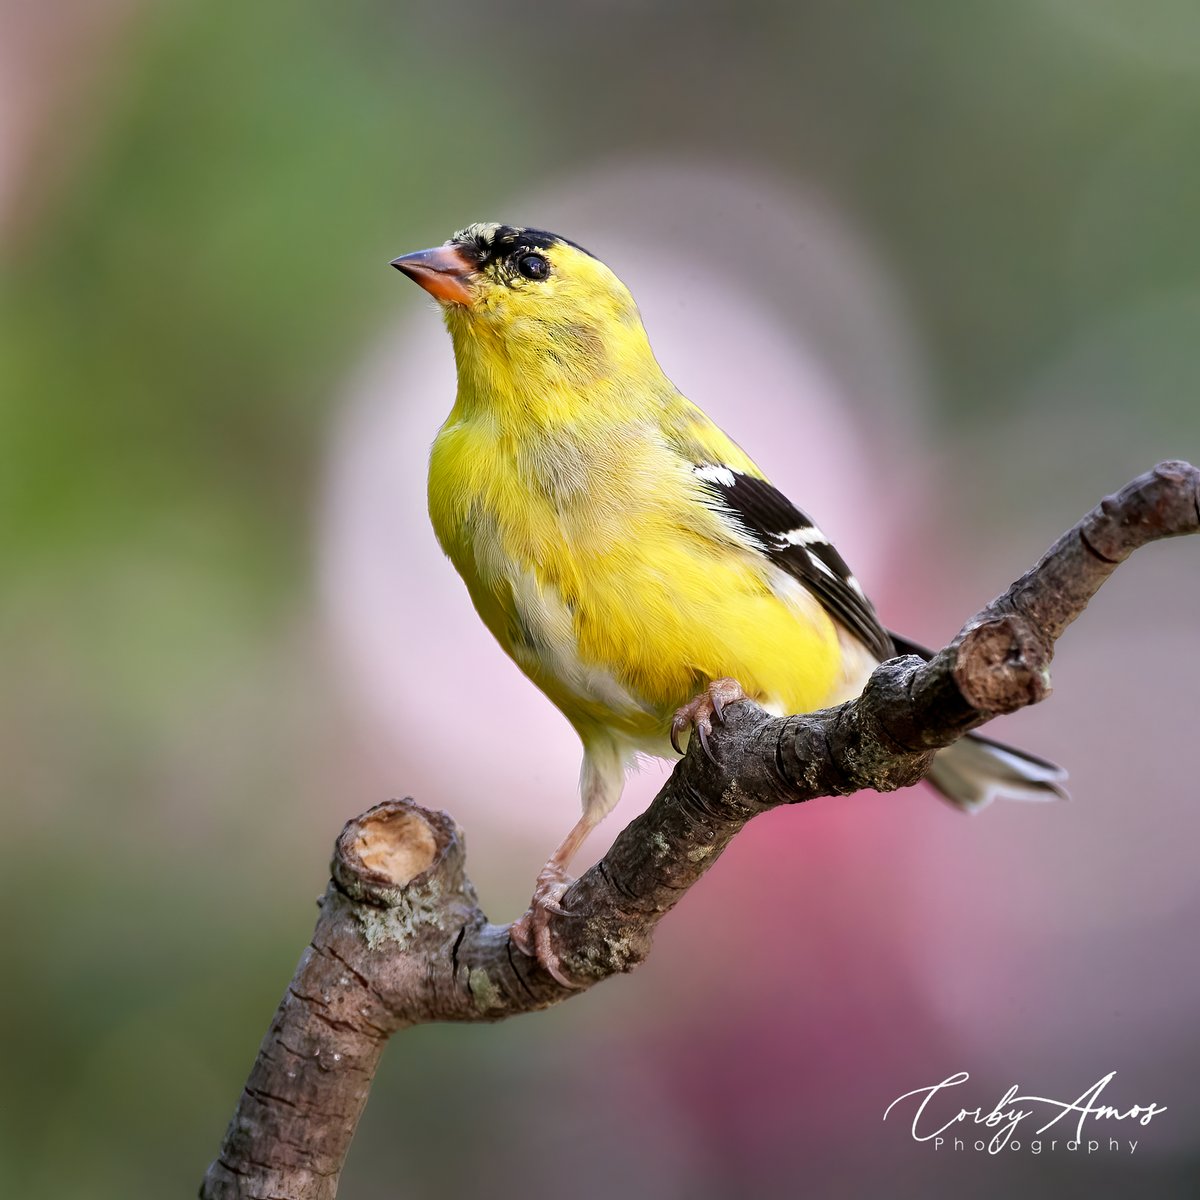 American Goldfinch
.
linktr.ee/corbyamos
.
#birdphotography #birdwatching #birding #BirdTwitter #twitterbirds #birdpics #americangoldfinch